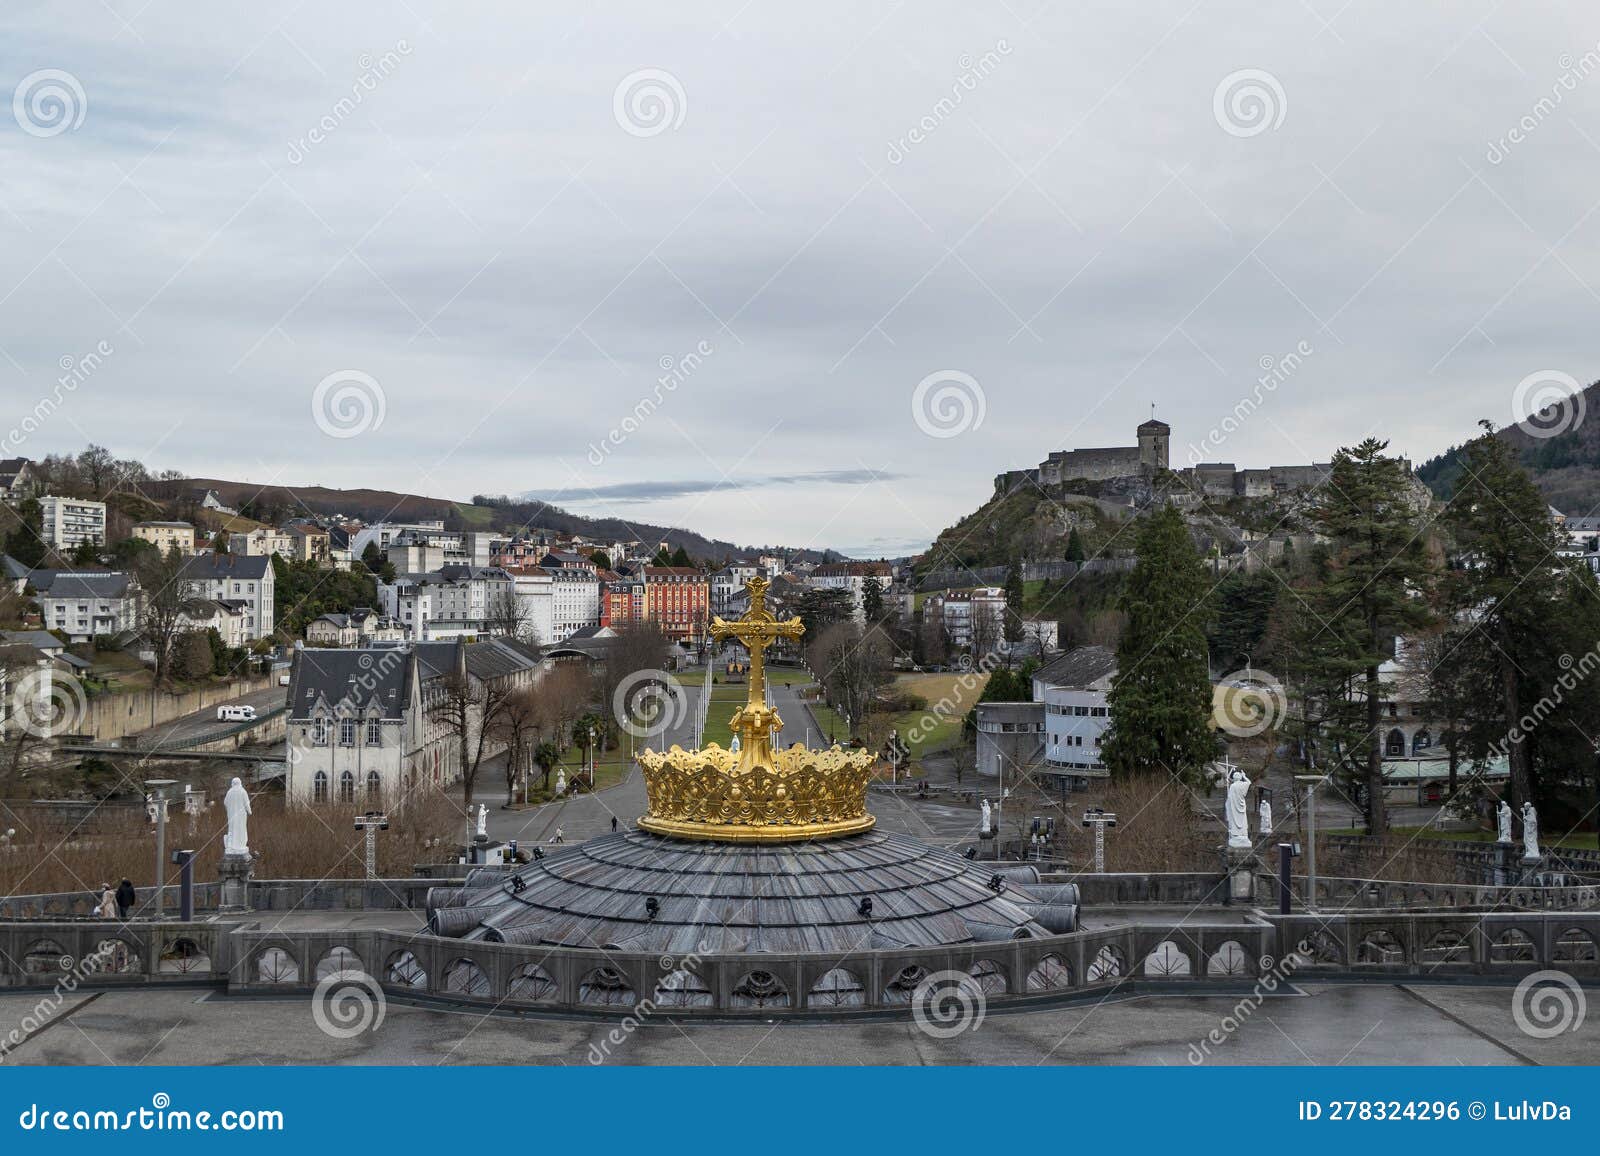 Sanctuary of Lourdes stock photo. Image of lourdes, dome - 278324296